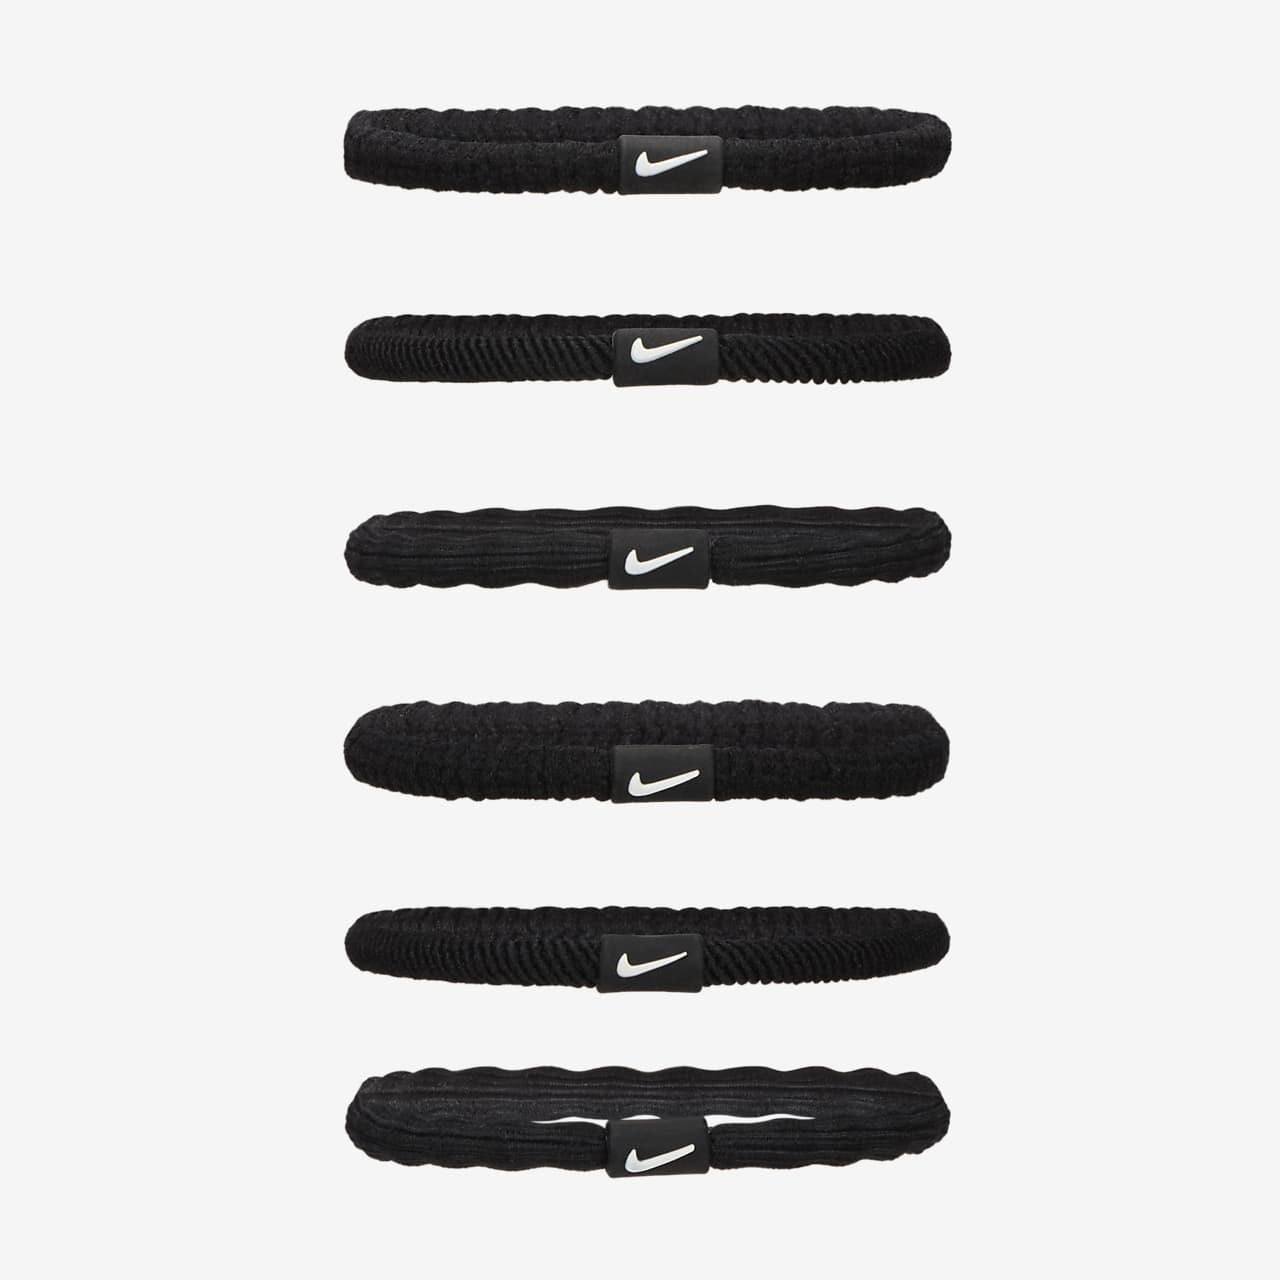 Cintas para el pelo Nike Skinny (paquete de 8).